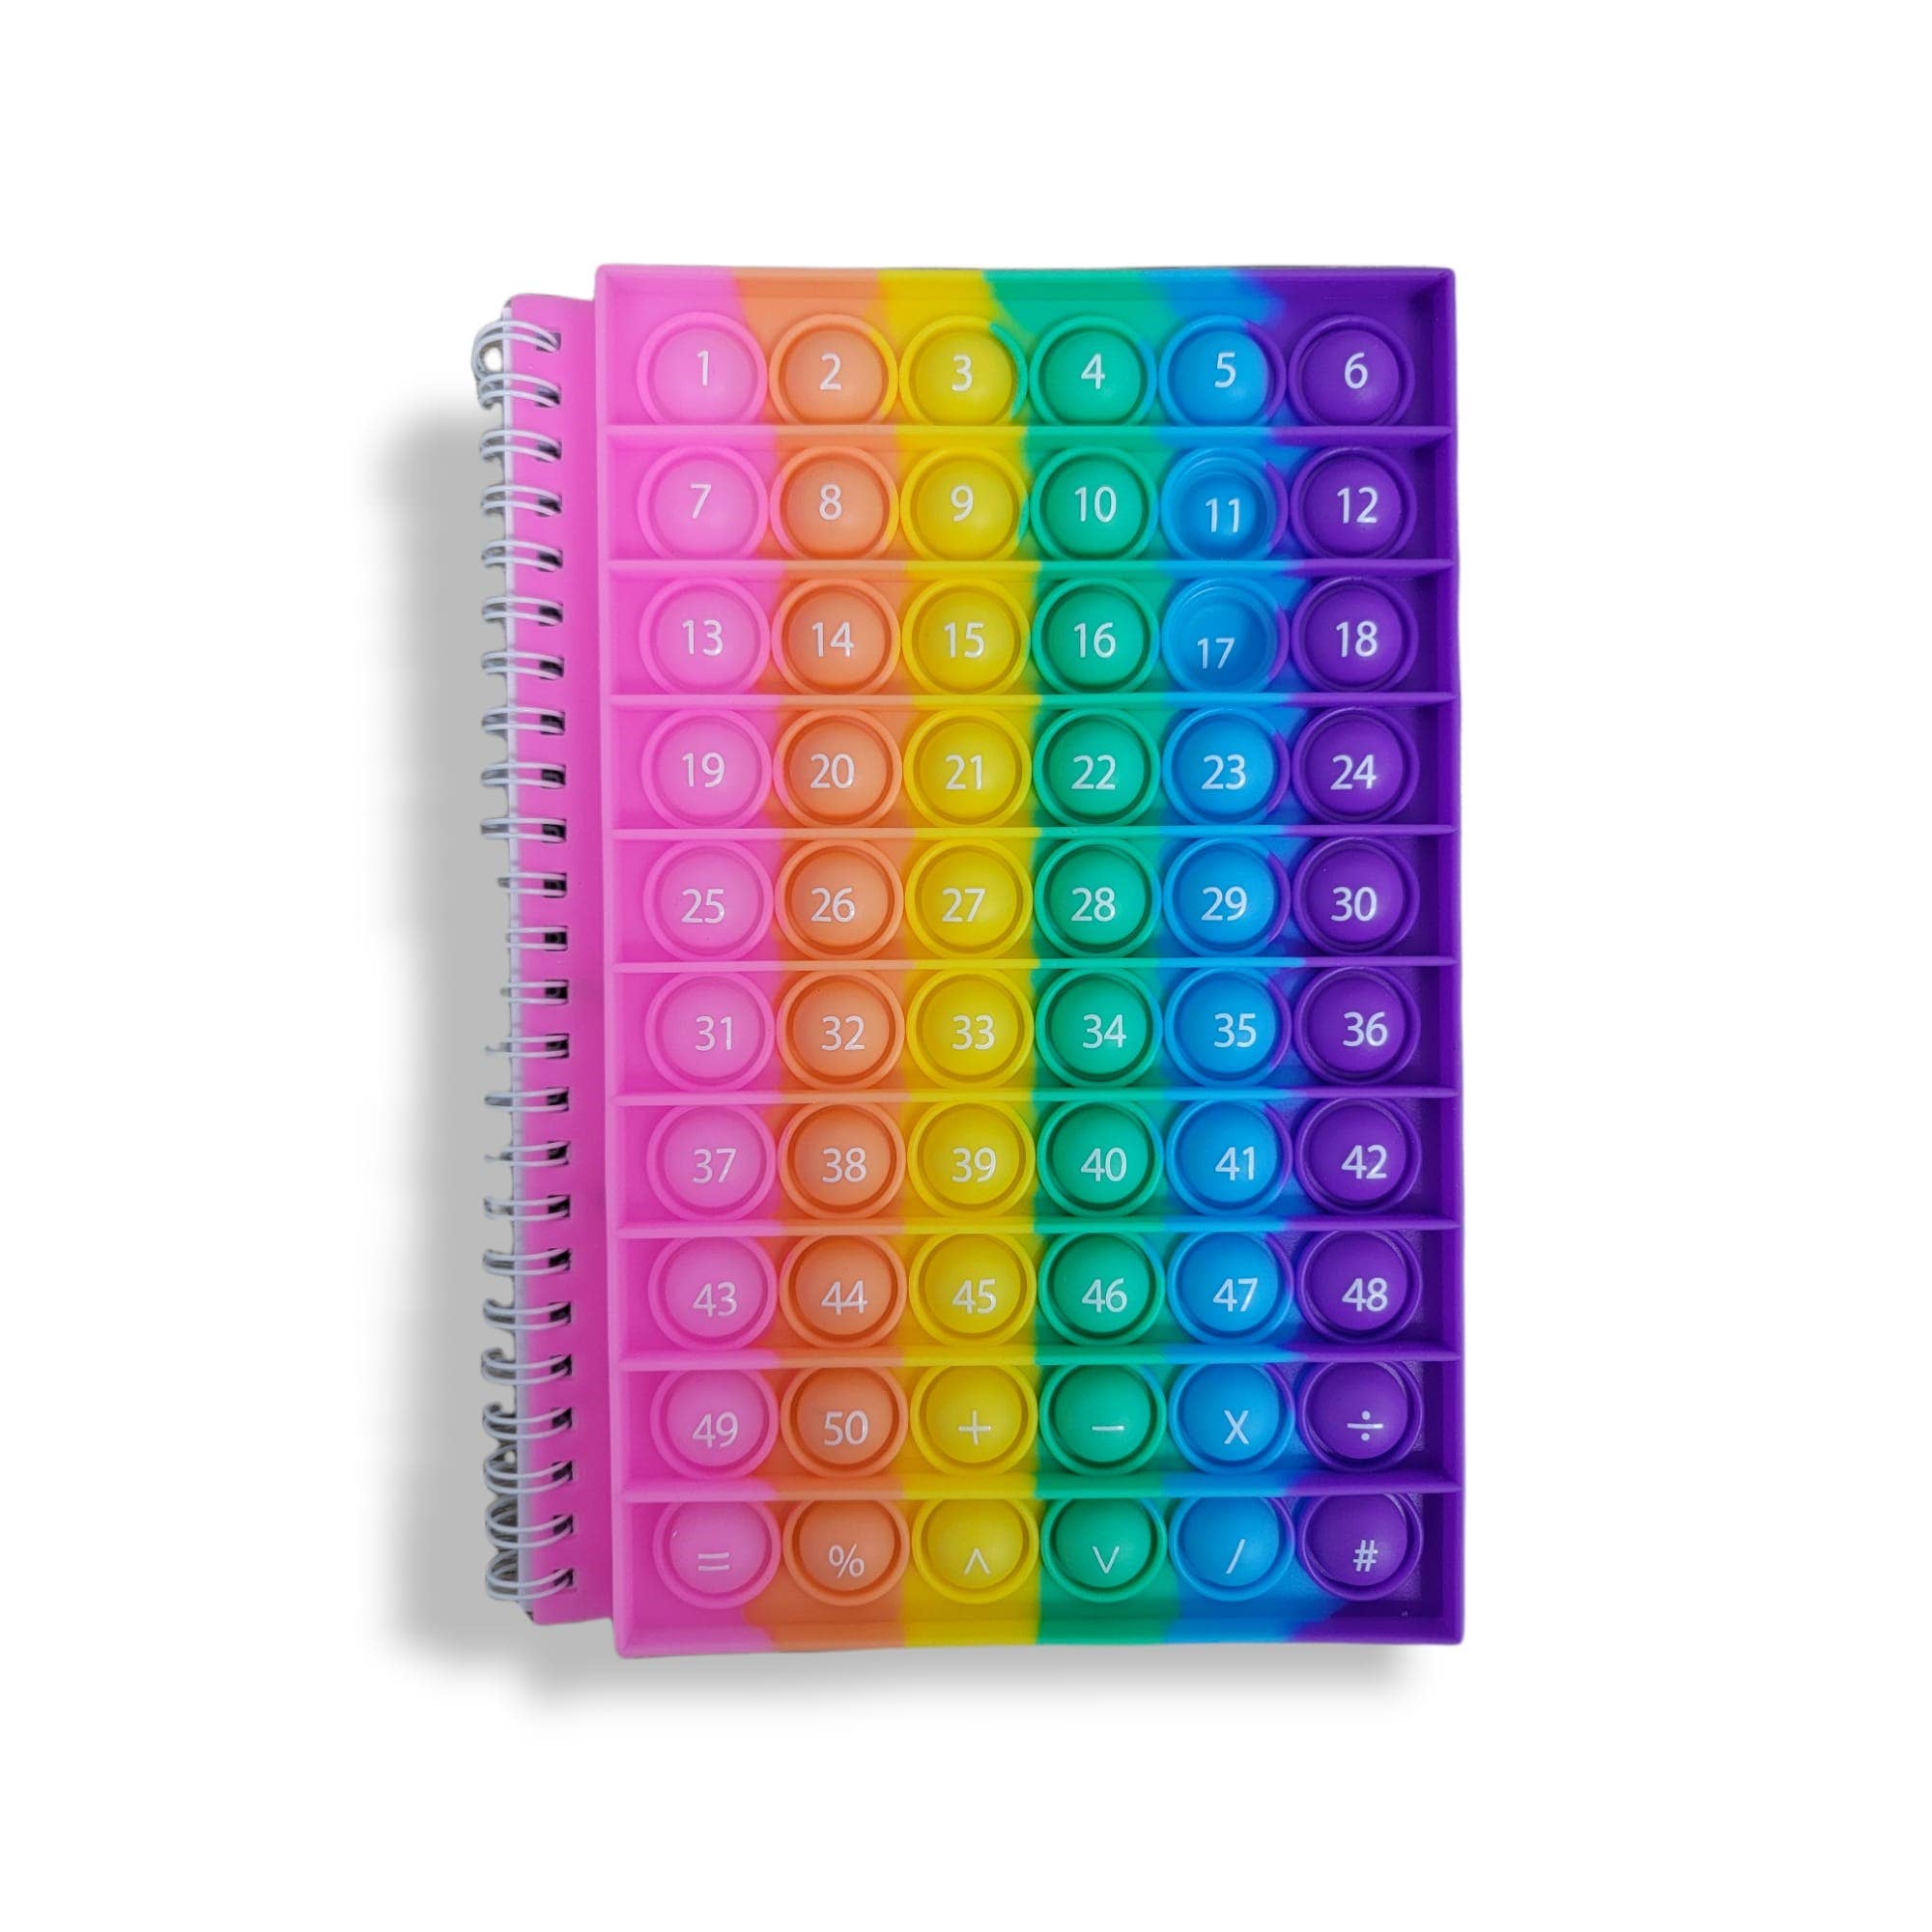 Blue yellow powder Notebook Pop It,Pop Bubble Notebook,Notebook Pop,Spiral Notebook,PopIt Notebook Set for Kids Girls 